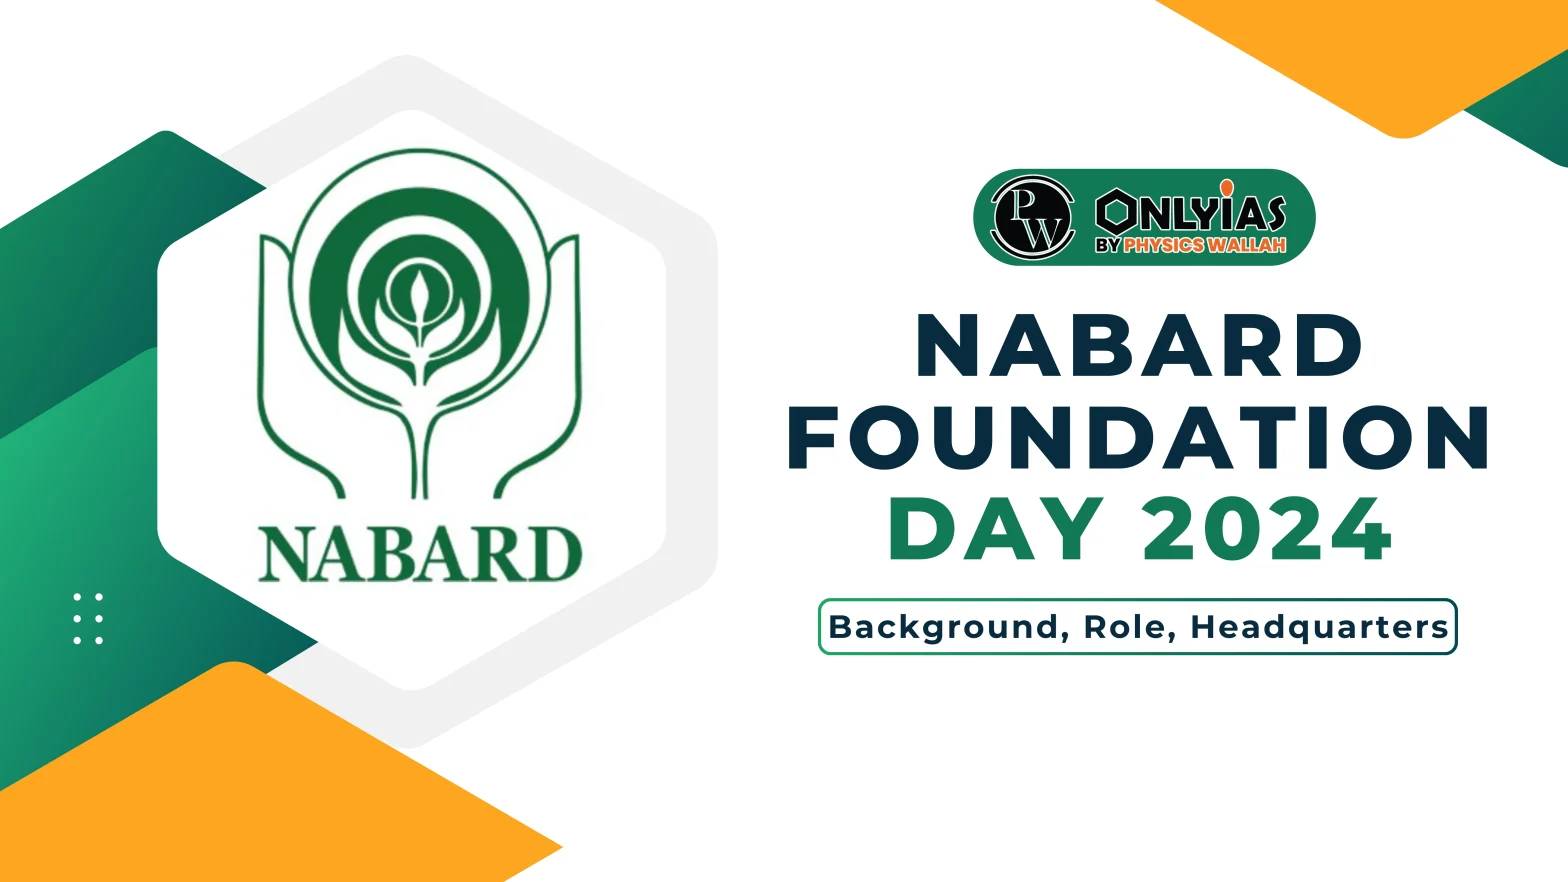 NABARD Foundation Day 2024, Background, Role, Headquarters